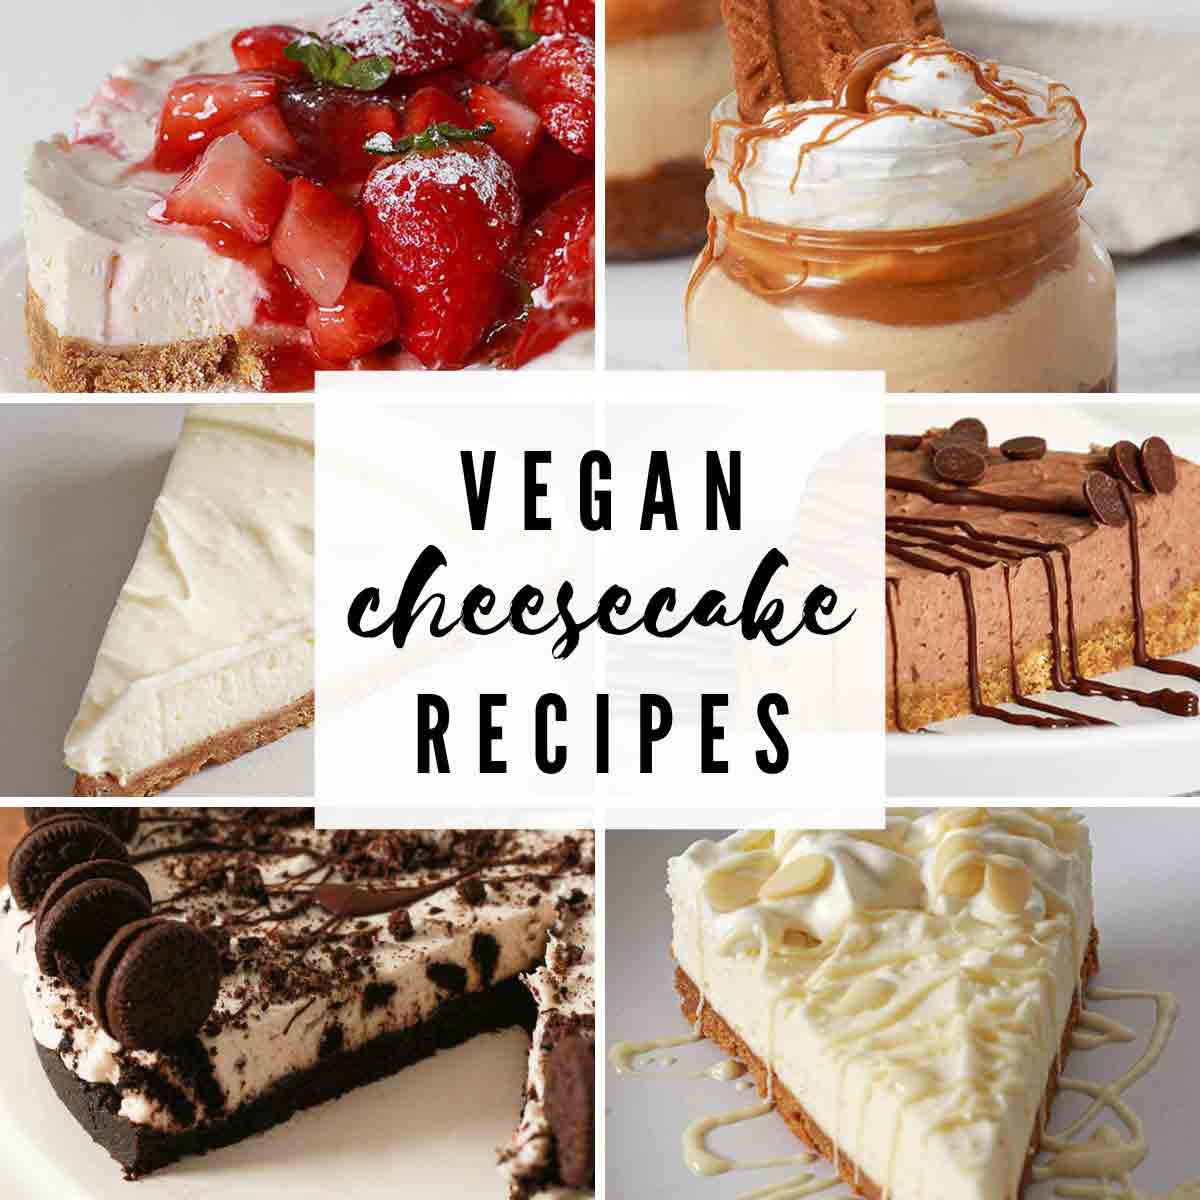 6 Images Of Vegan Cheesecake Recipes